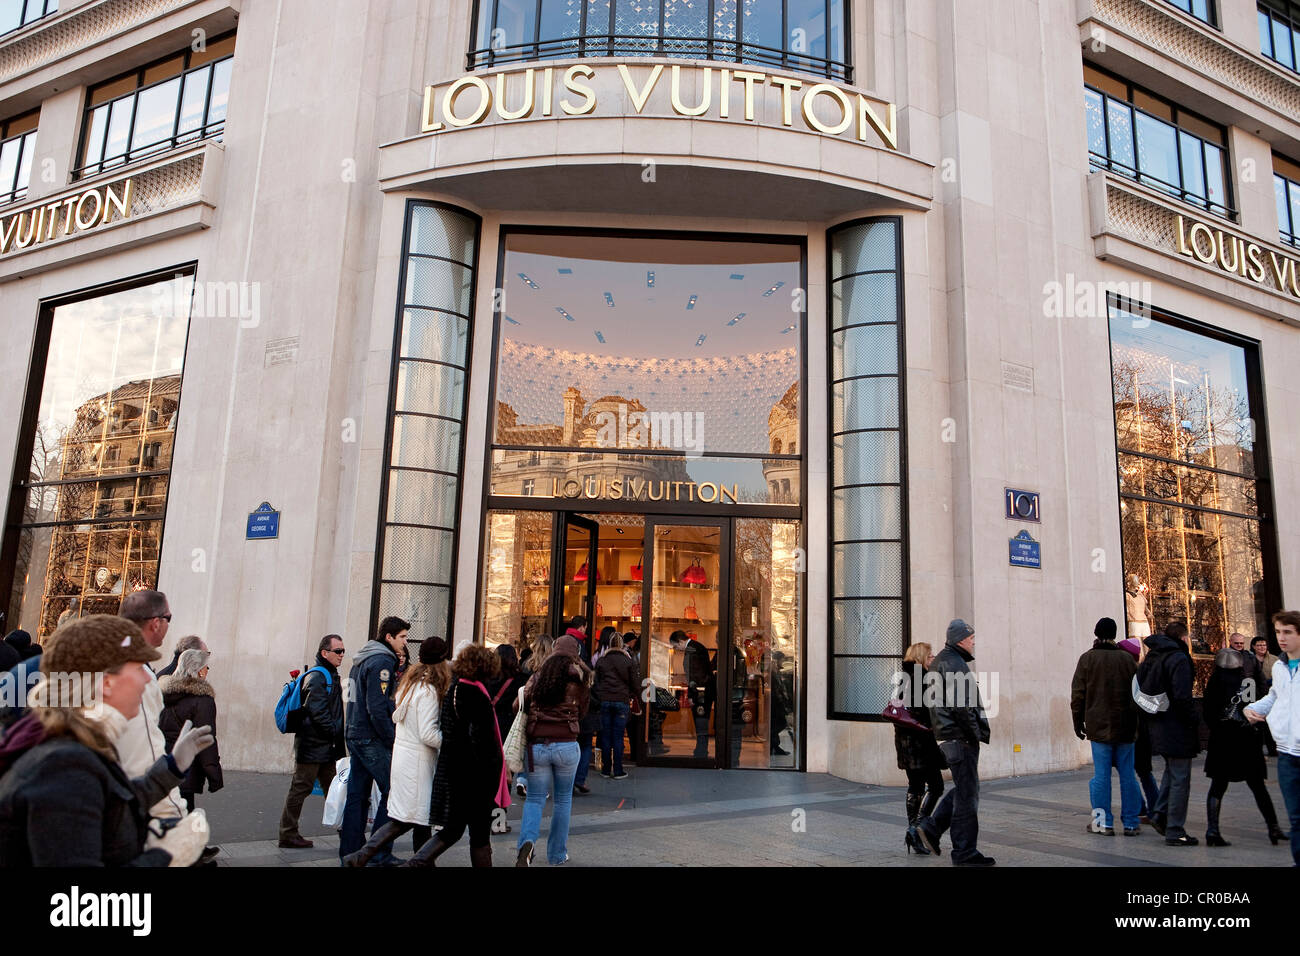 France paris louis vuitton store hi-res stock photography and images - Alamy